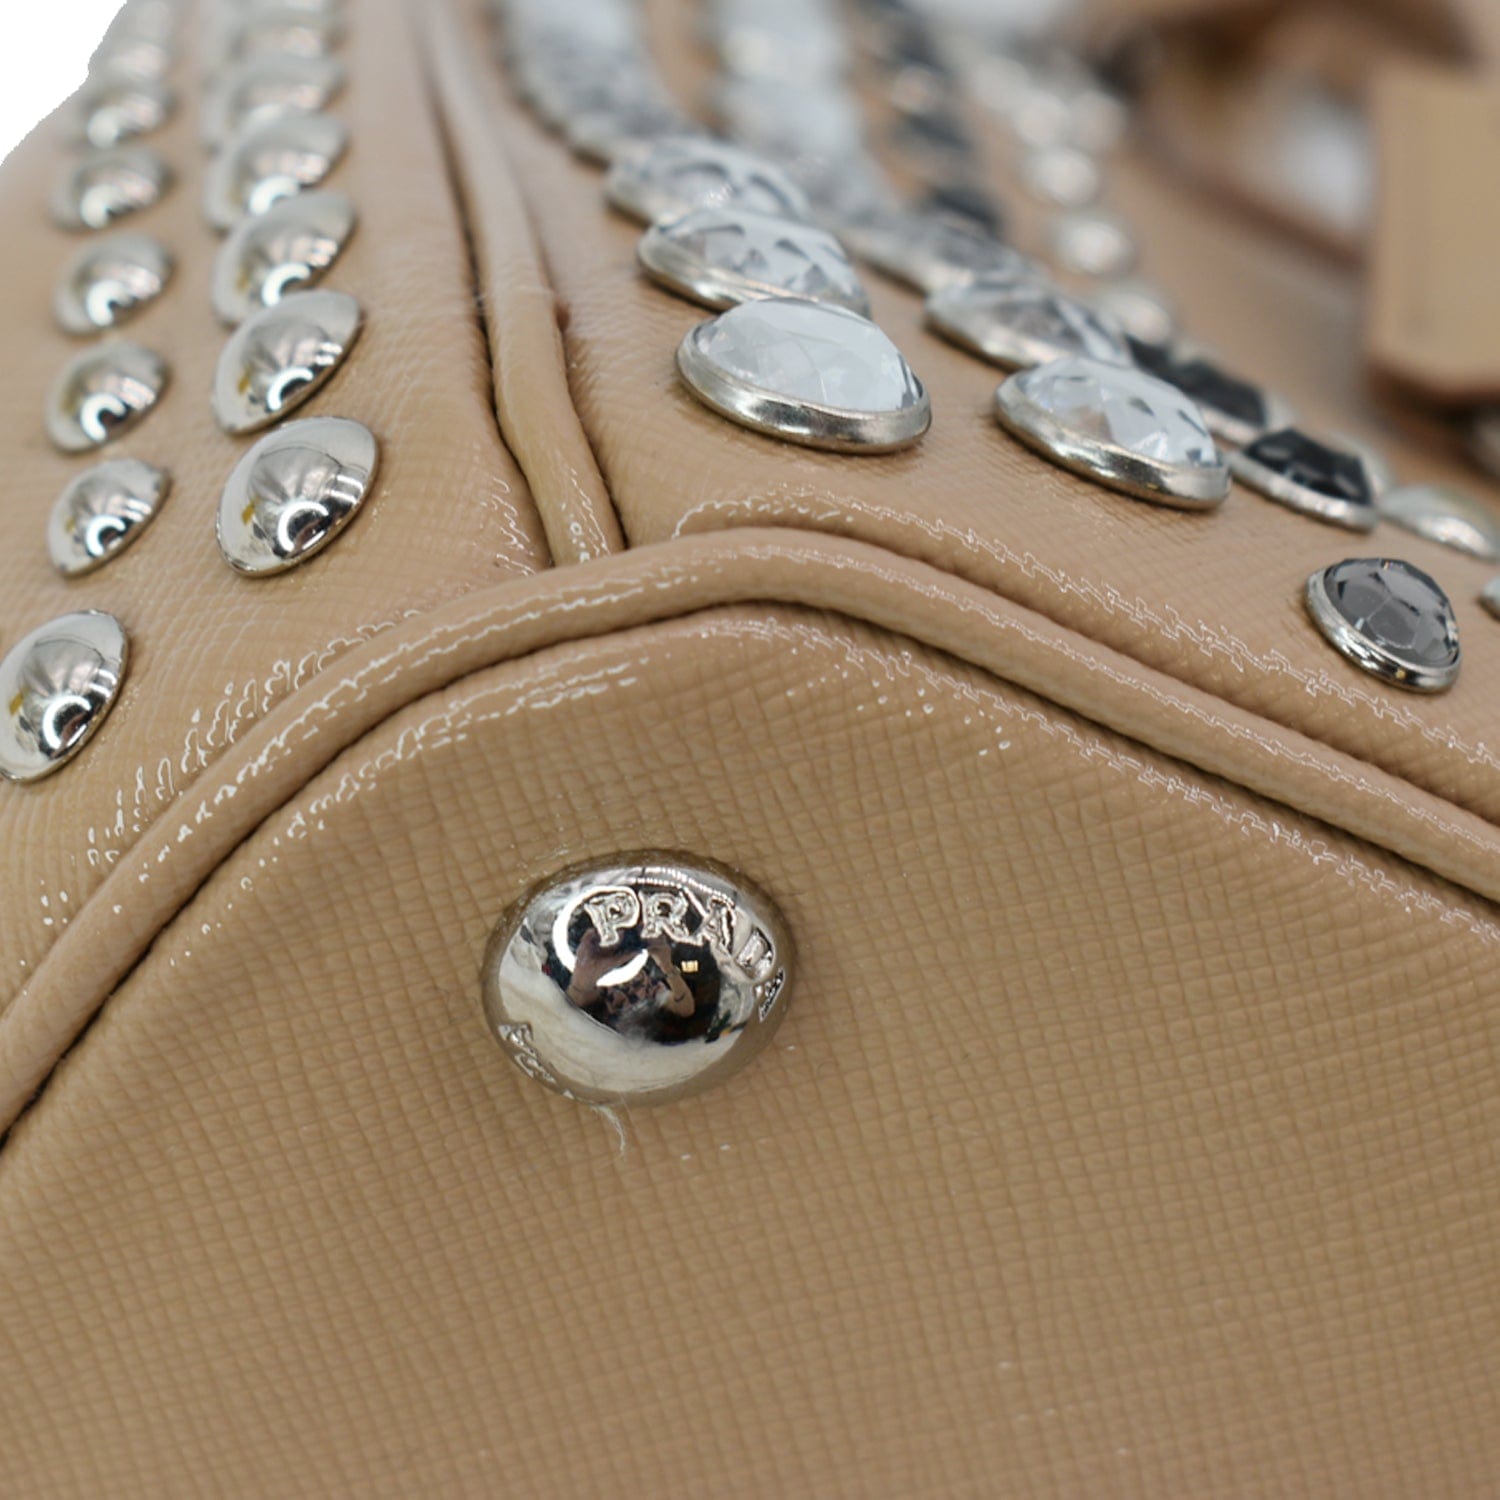 Prada City Calf Handbag in Beige Leather